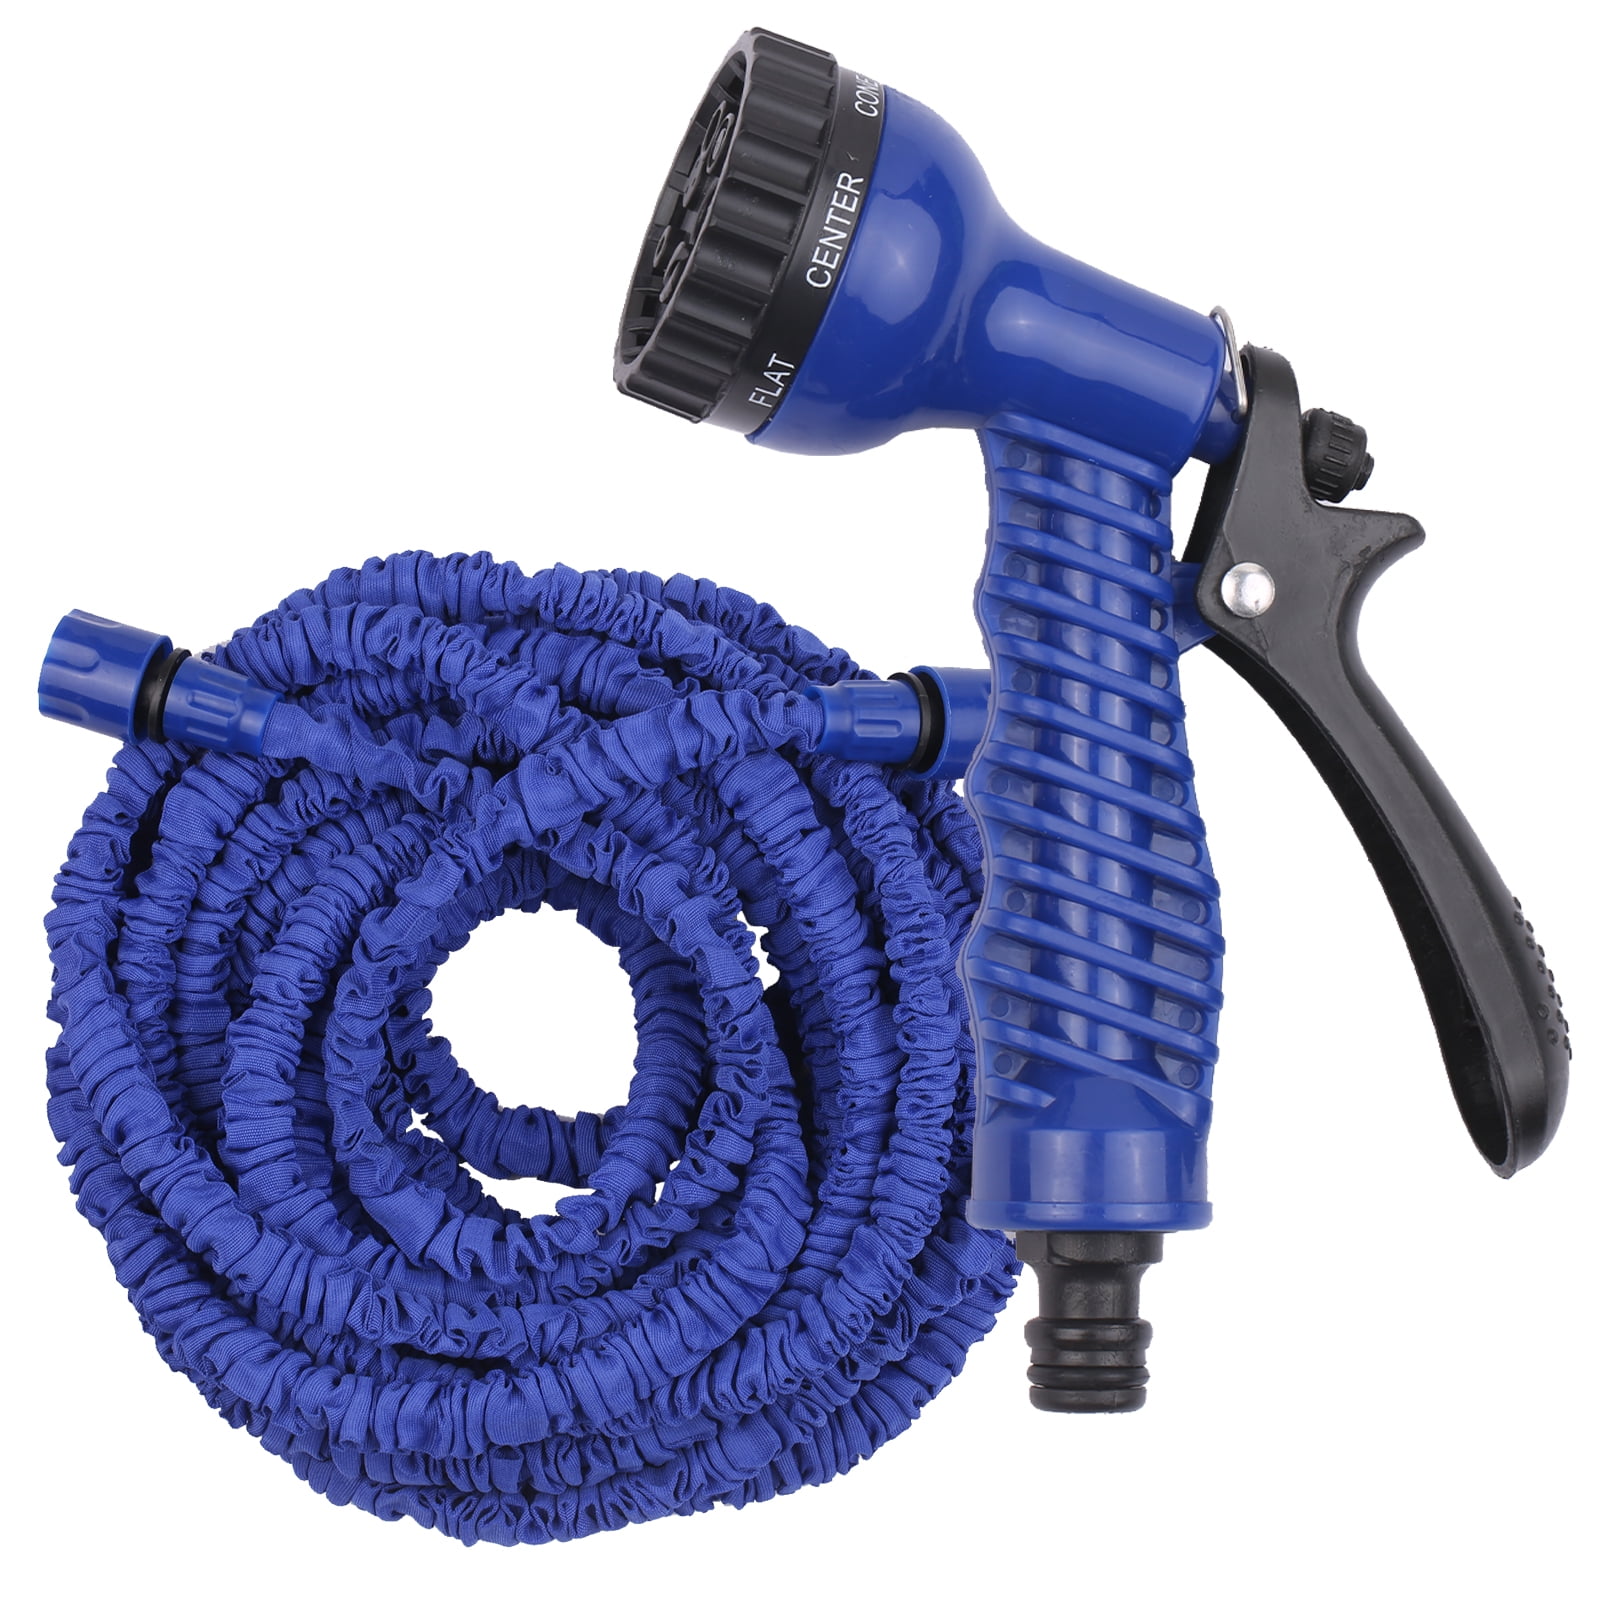 Details about   High Pressure Power Water Washer Spray Gun & Hose Nozzle Tap Adapter Garden Tool 